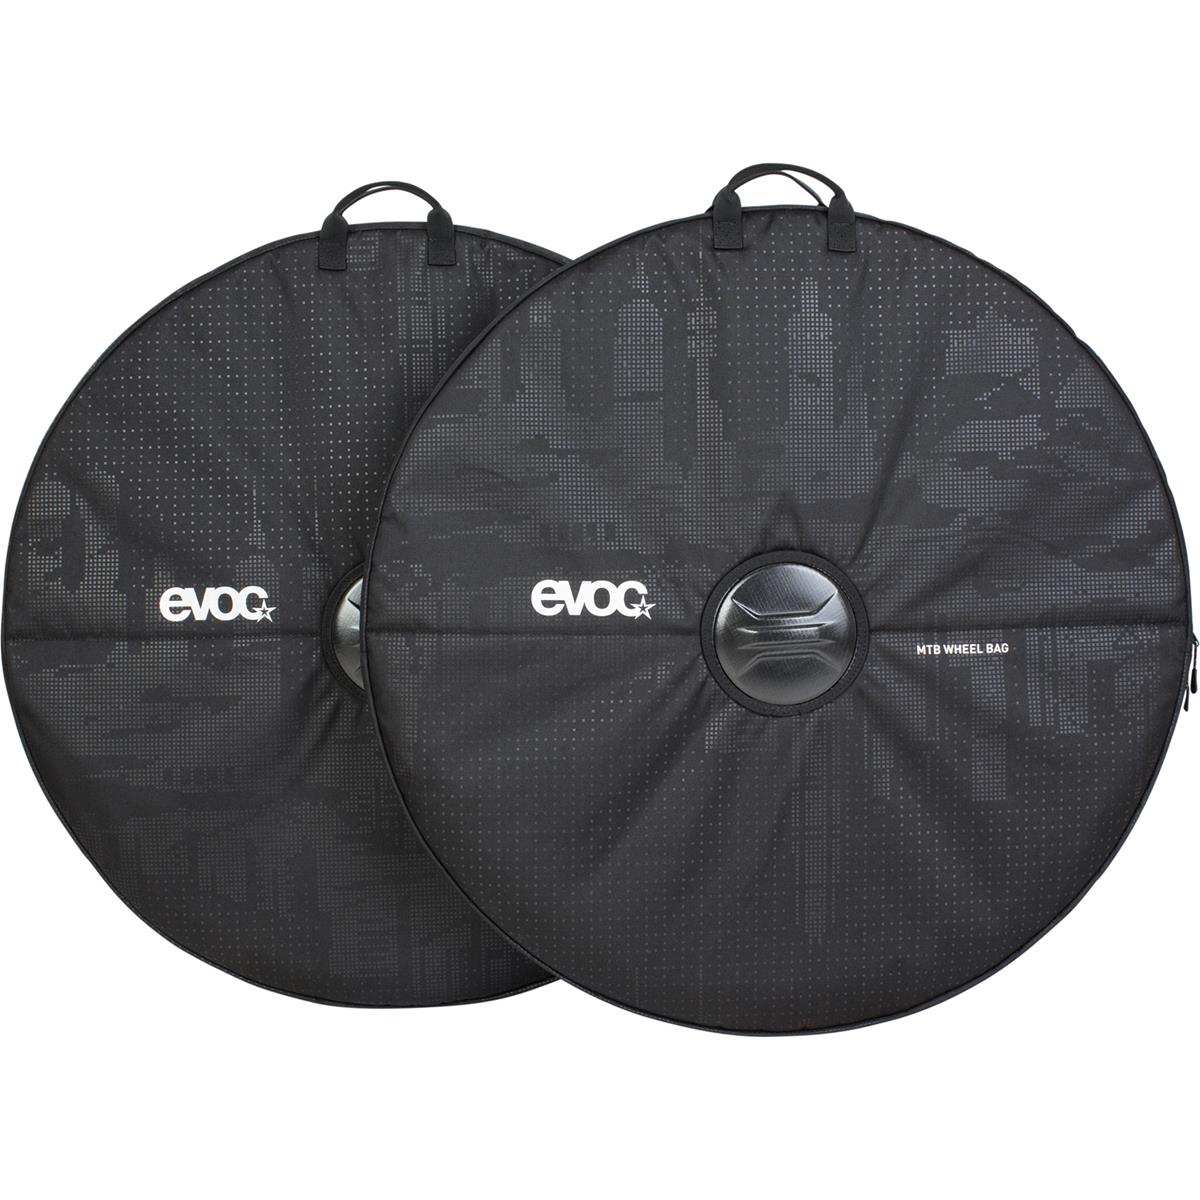 Evoc Laufrad Schutzhüllen-Set MTB Wheel Bag Schwarz